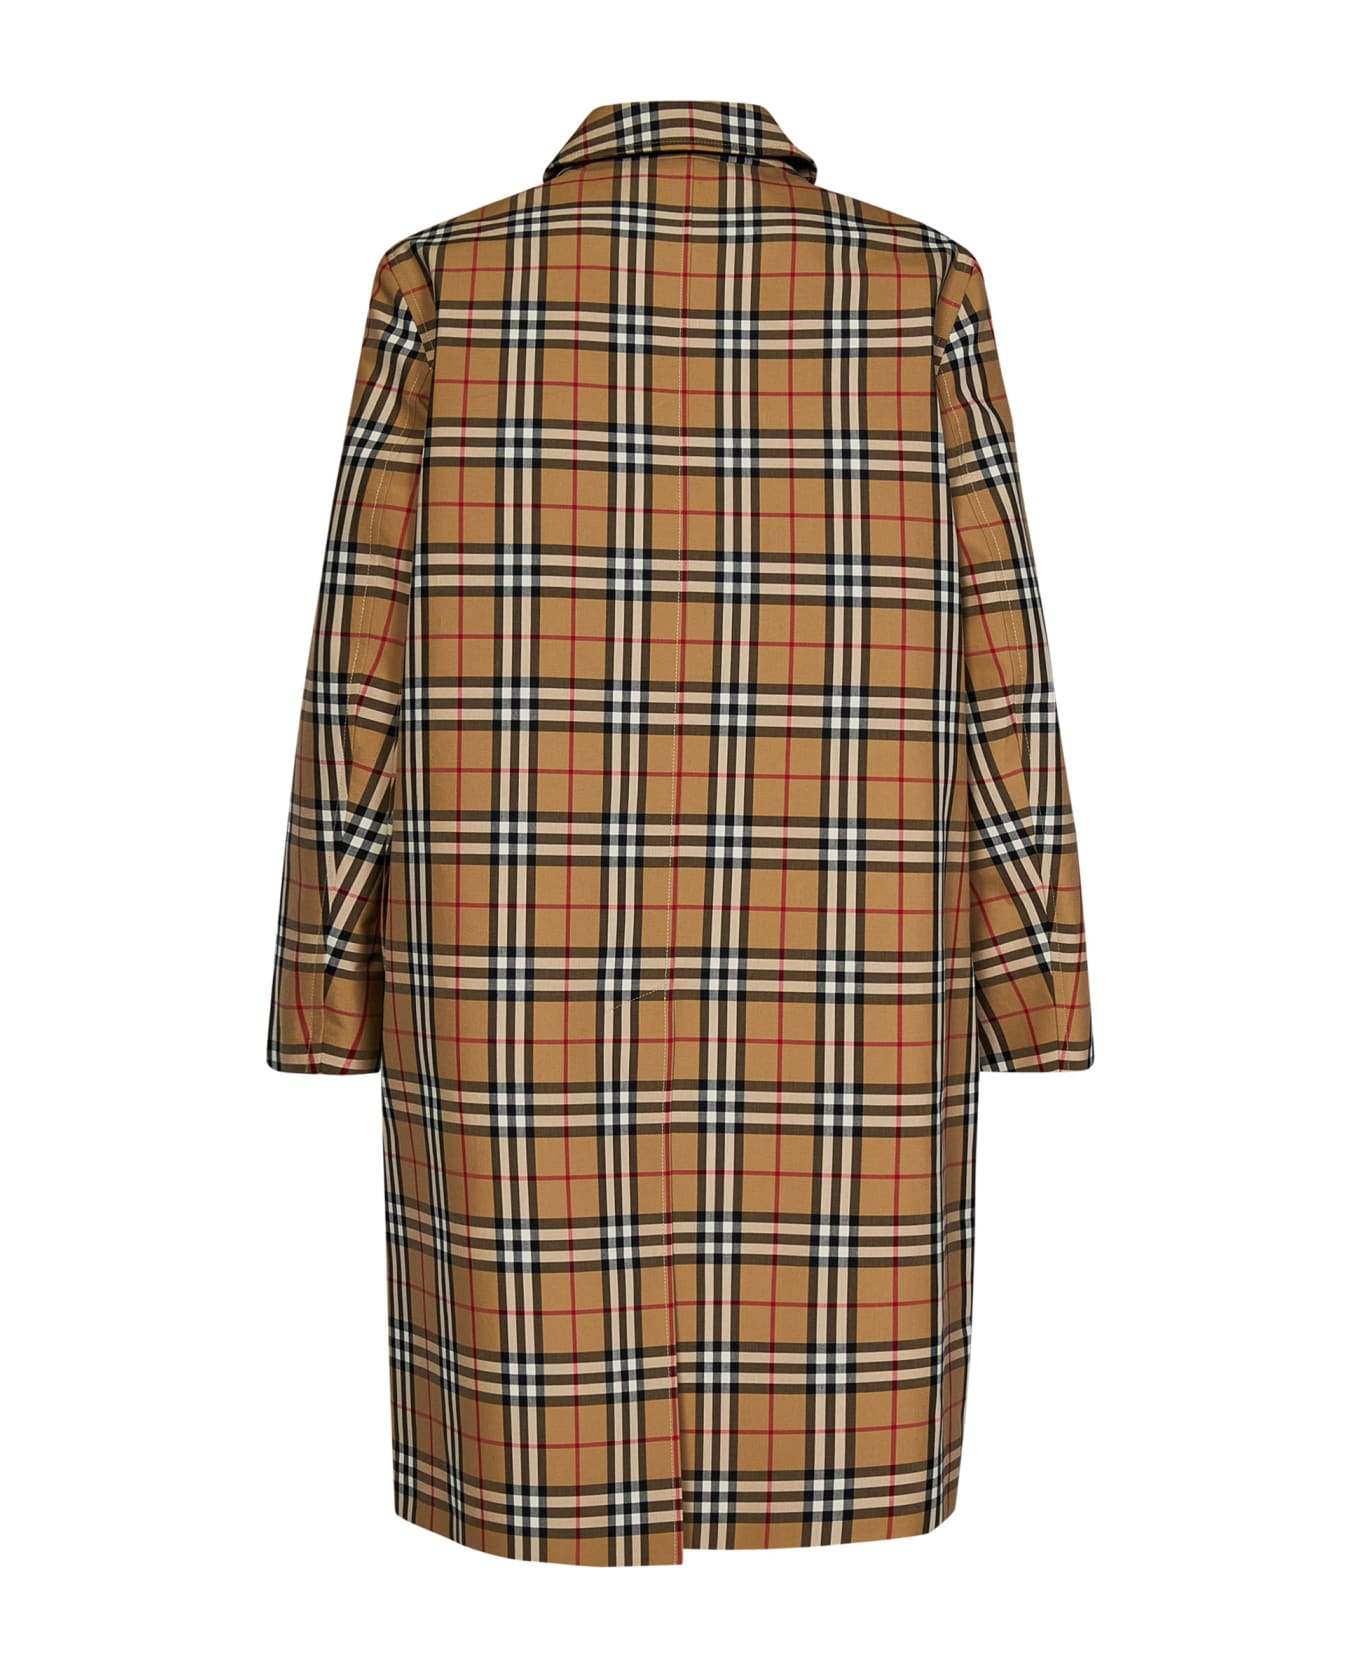 Burberry 'brookvale' Beige Coat With All-over Vintage Check Motif In Cotton Blend Man - Beige